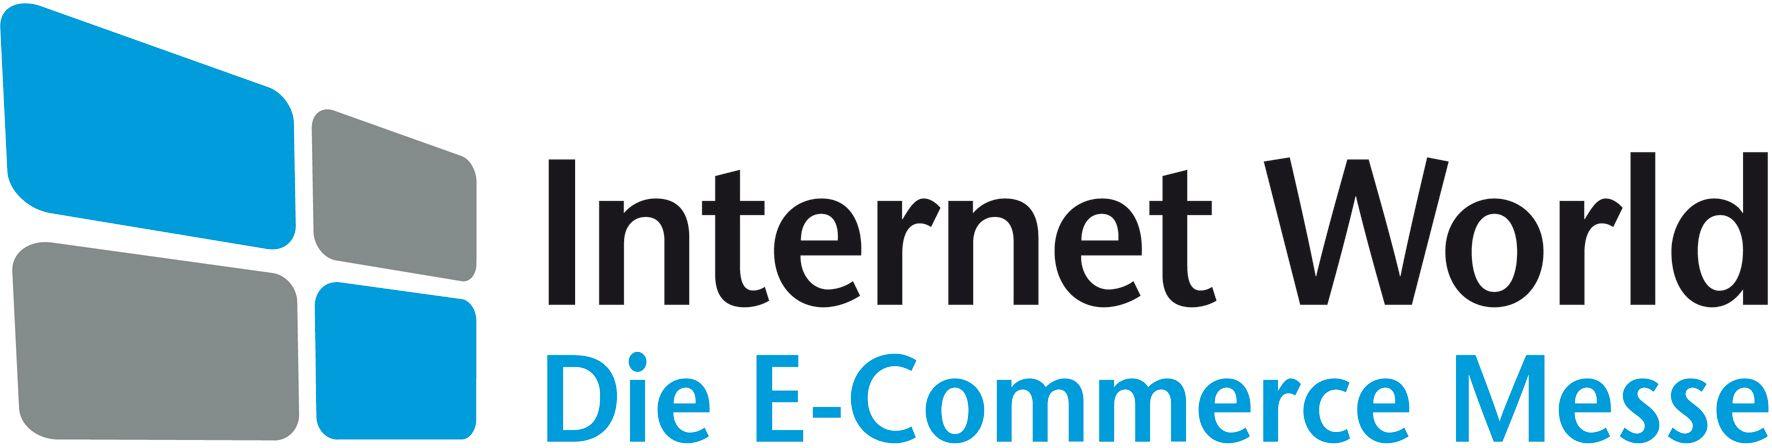 Internet World Logo - Internetworld Messe Logo | intelliAd